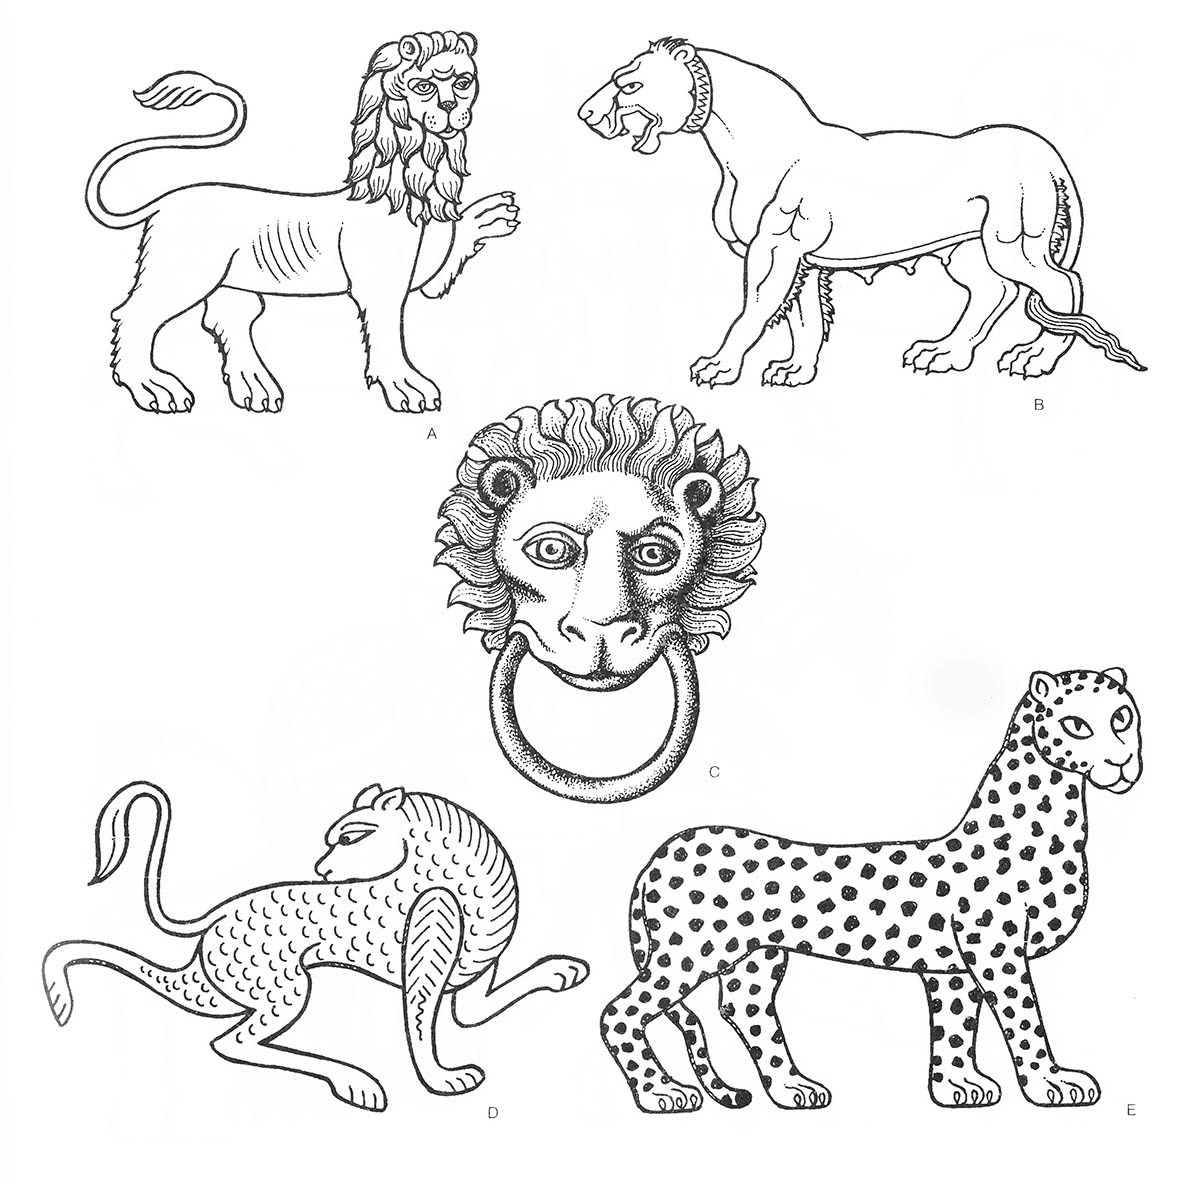 a — лев (самец, идущий с поднятой ногой), b — лев (львица), c — лев (самец, голова), d — леопард (бегущий), е — леопард / Византия